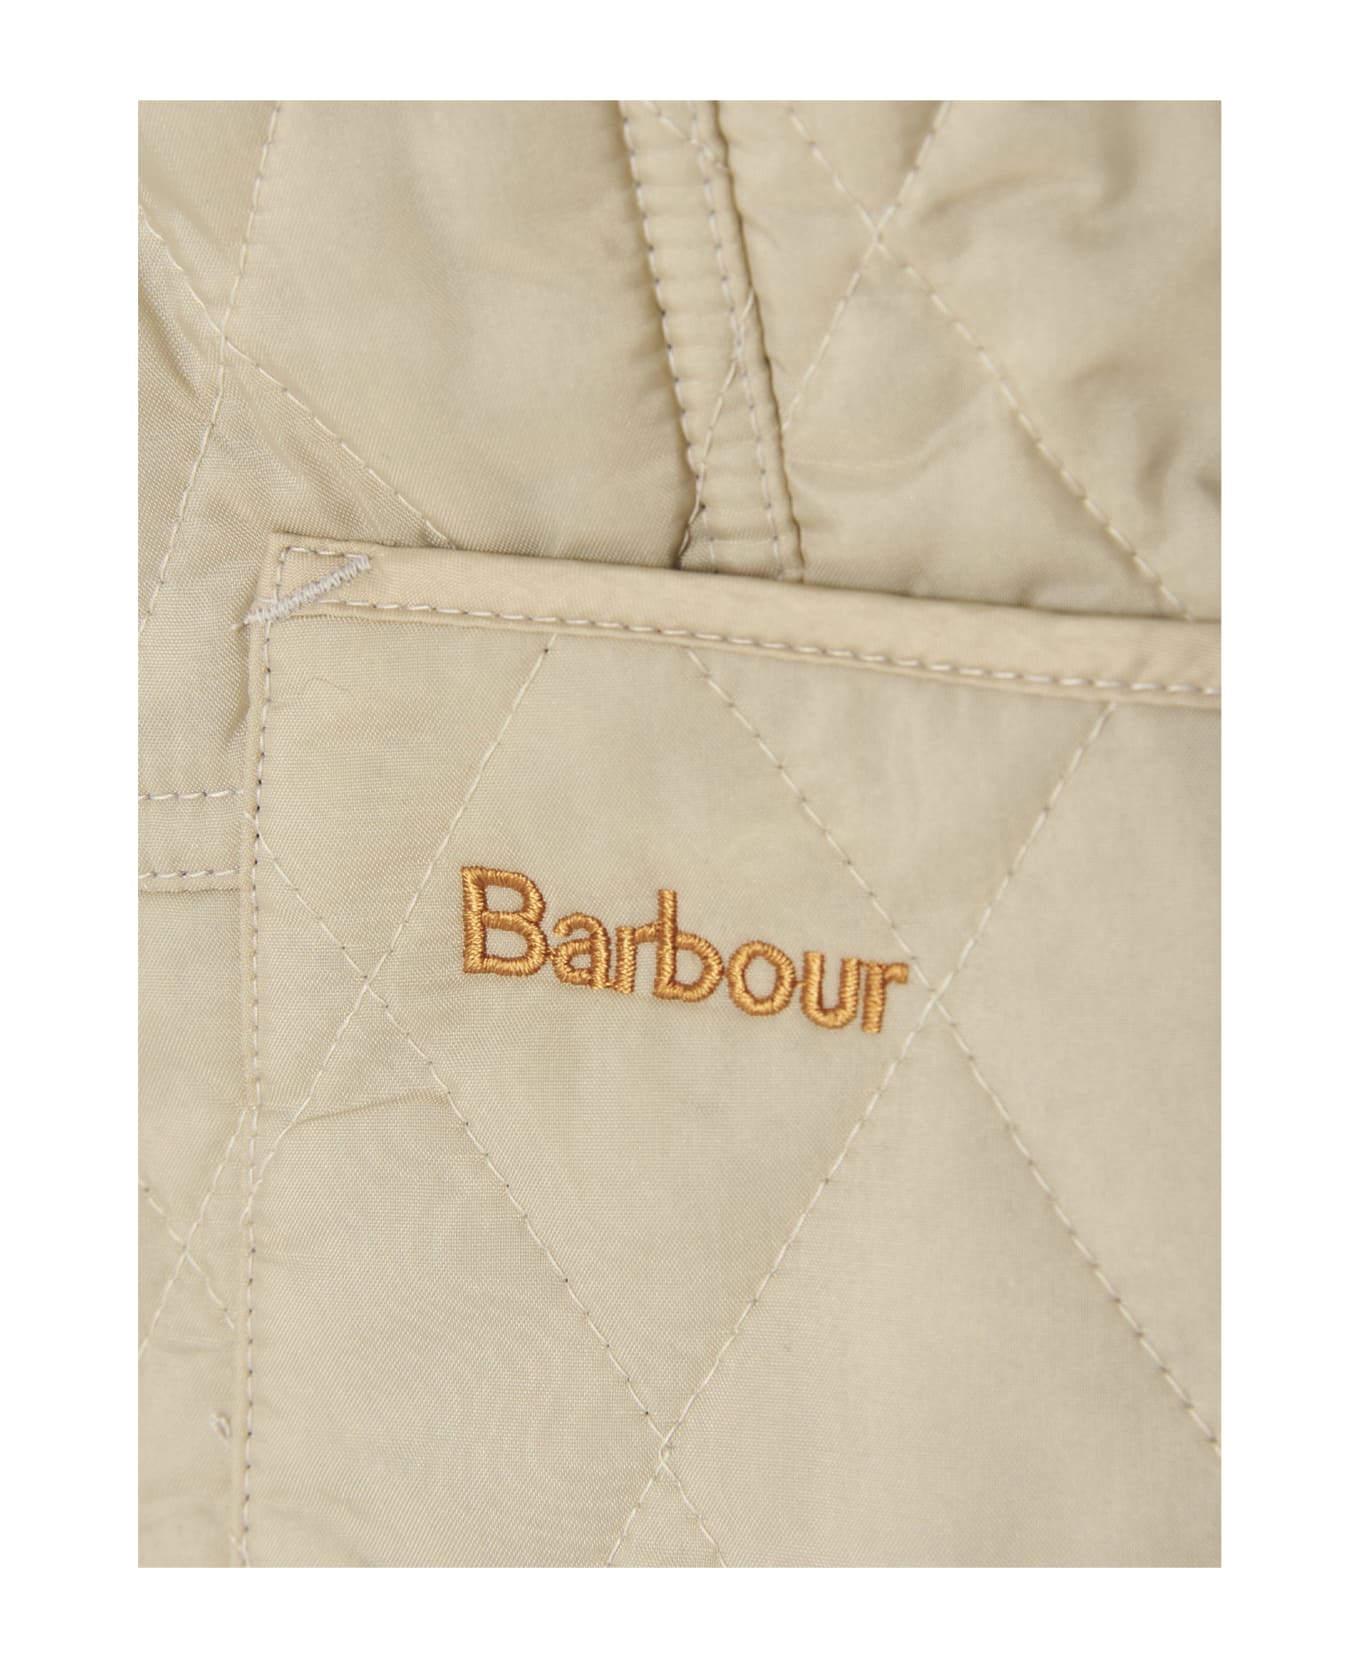 Barbour 'liddesdale' Jacket - Beige ジャケット